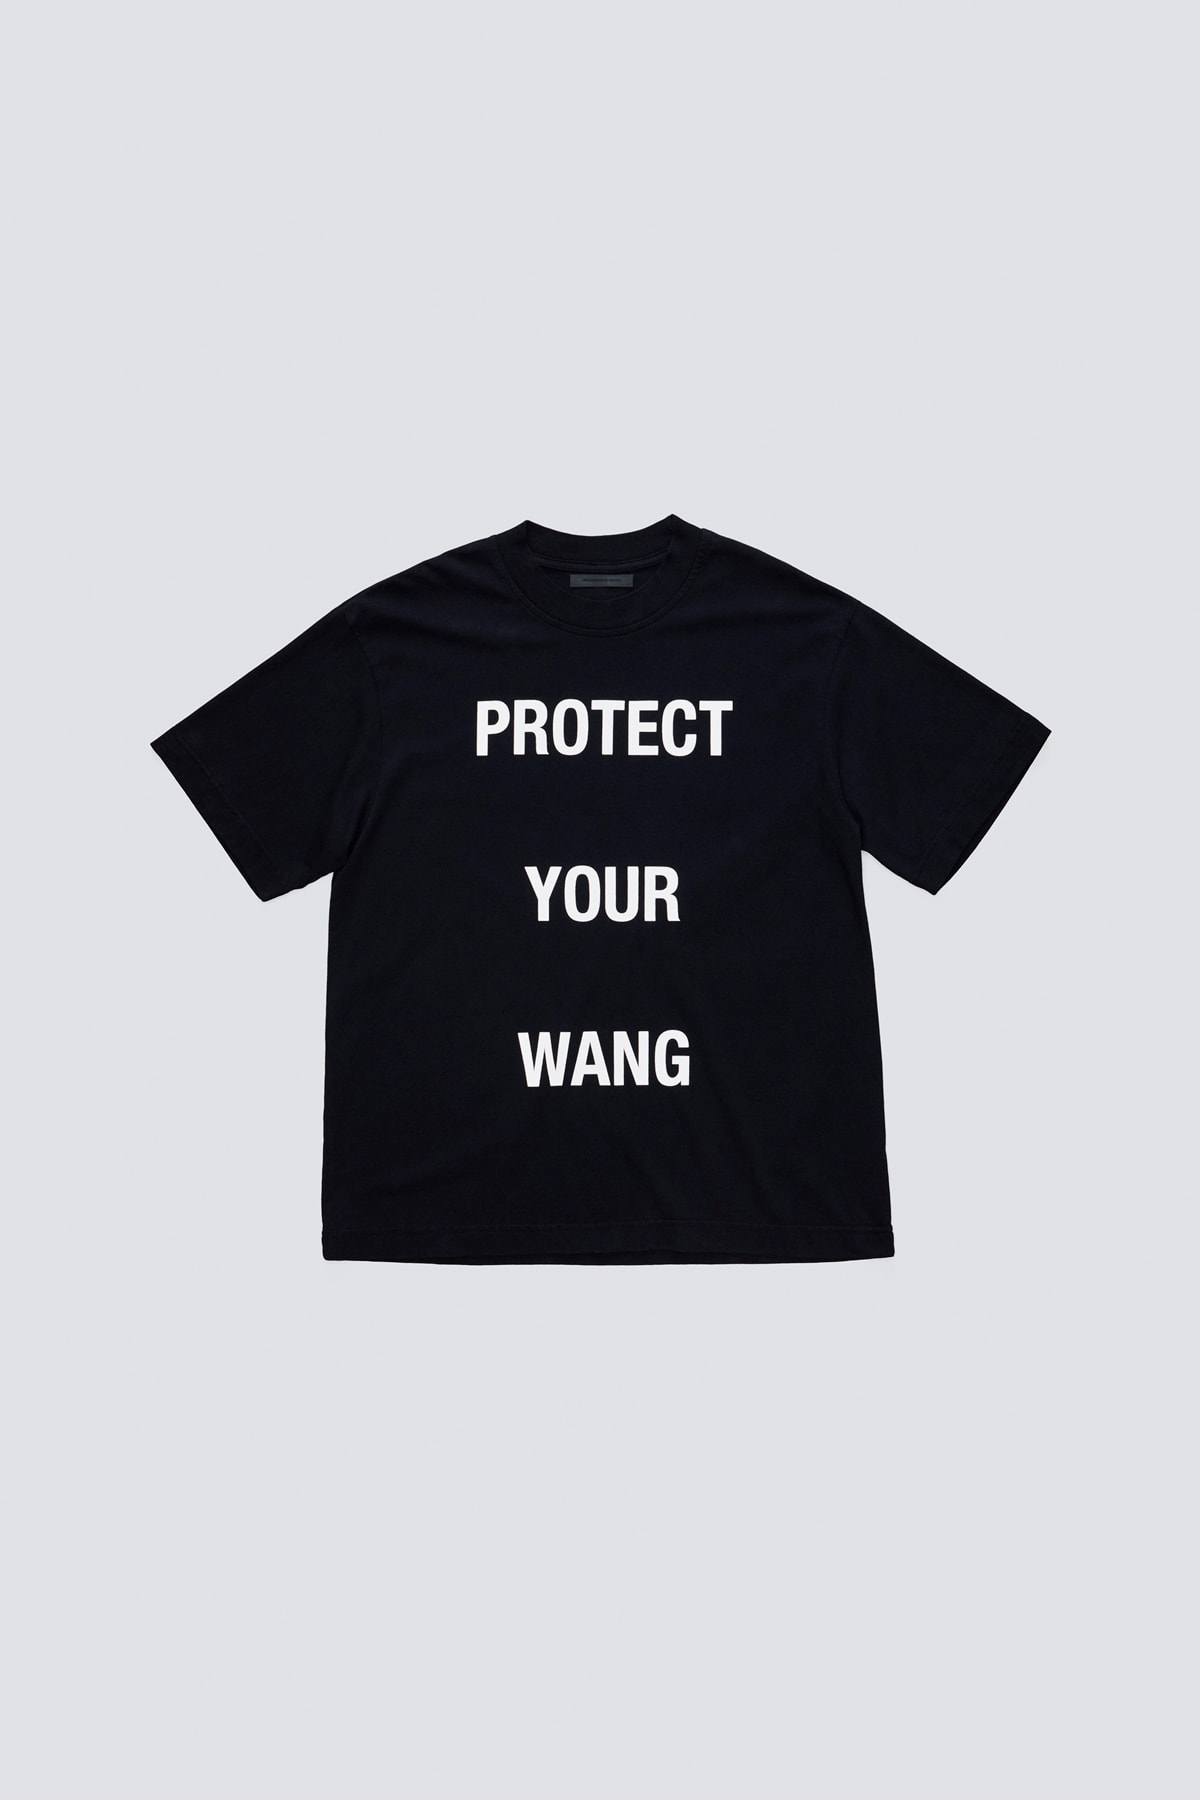 Alexander Wang x Trojan Condoms Protect Your Wang T-Shirt Black